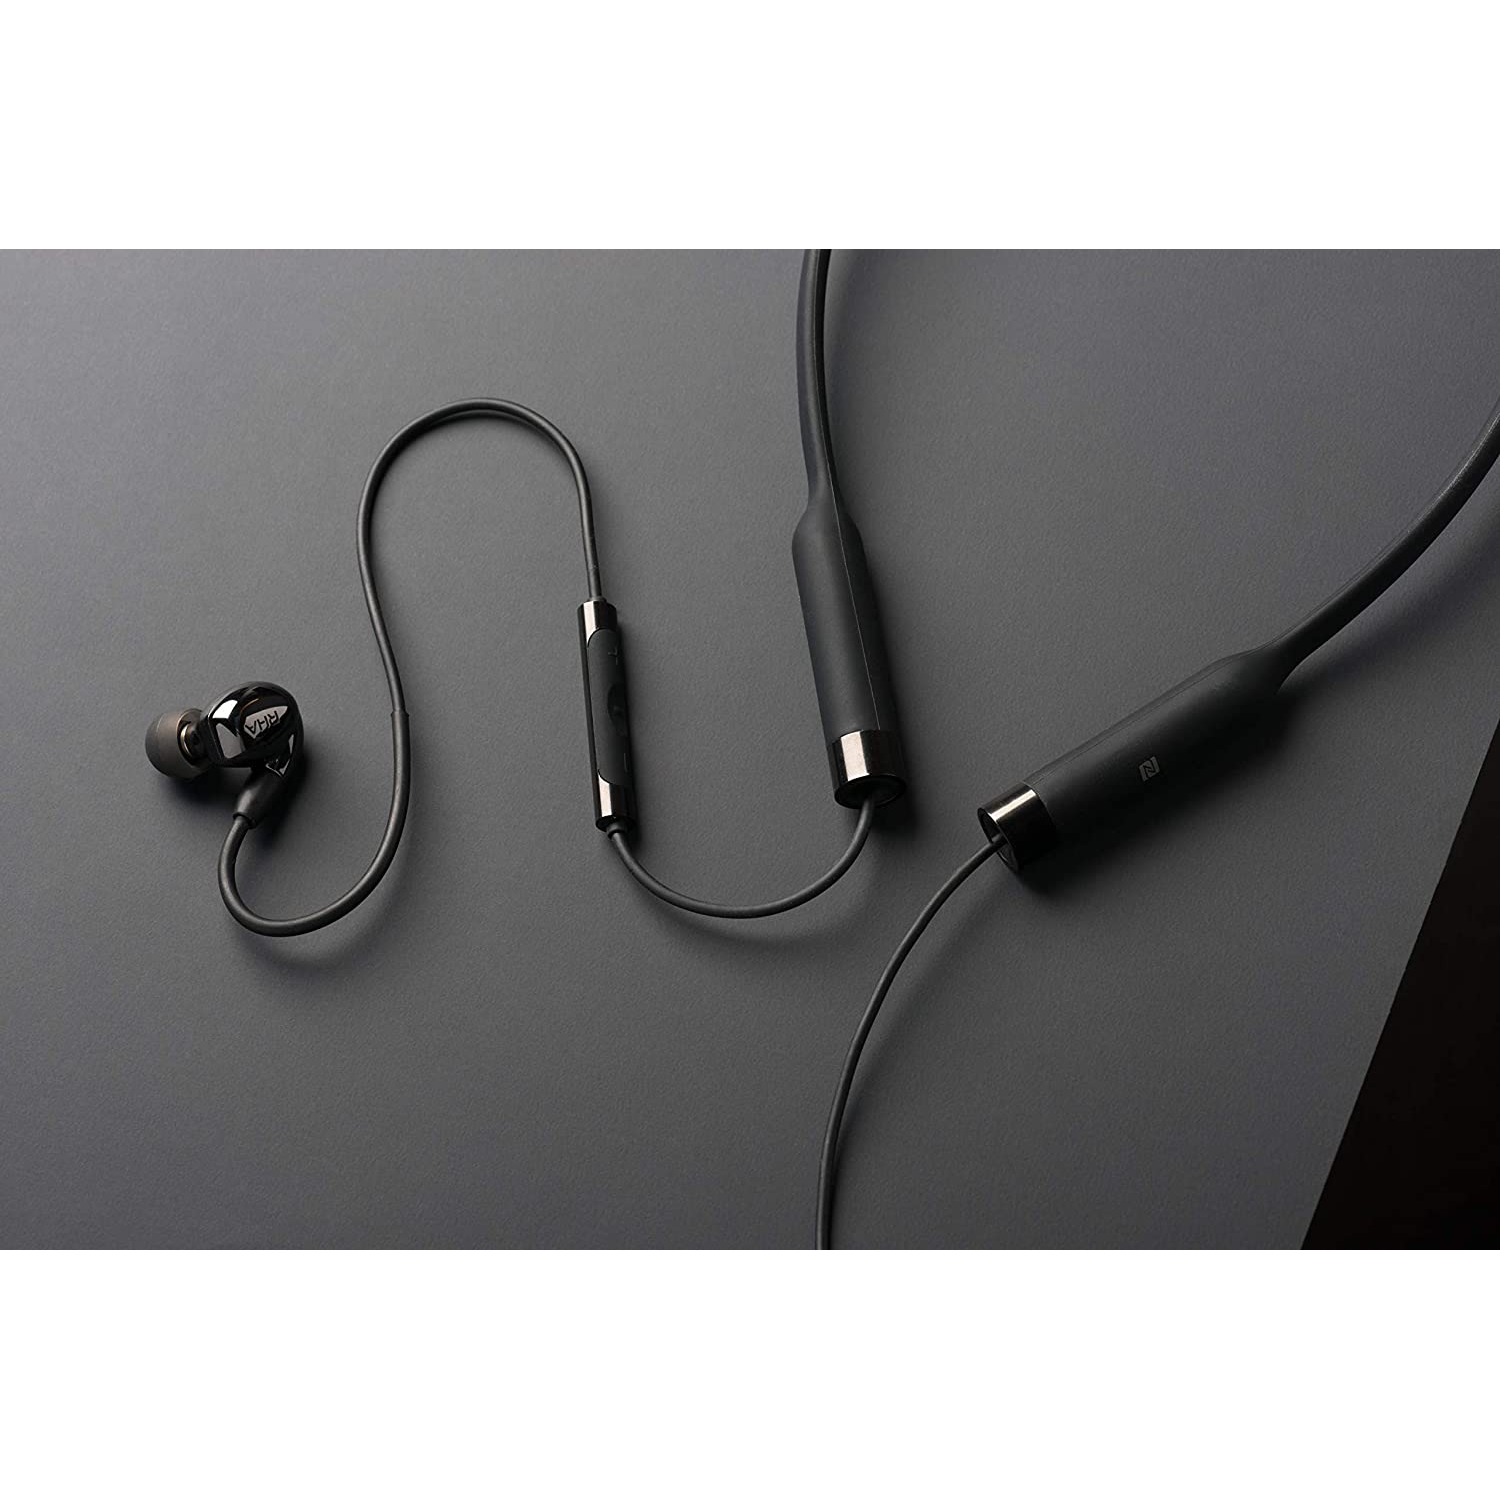 RHA CL2 Planar in-Ear Headphones: HiFi Planar Magnetic Driver IEM with Bluetooth Wireless Neckband